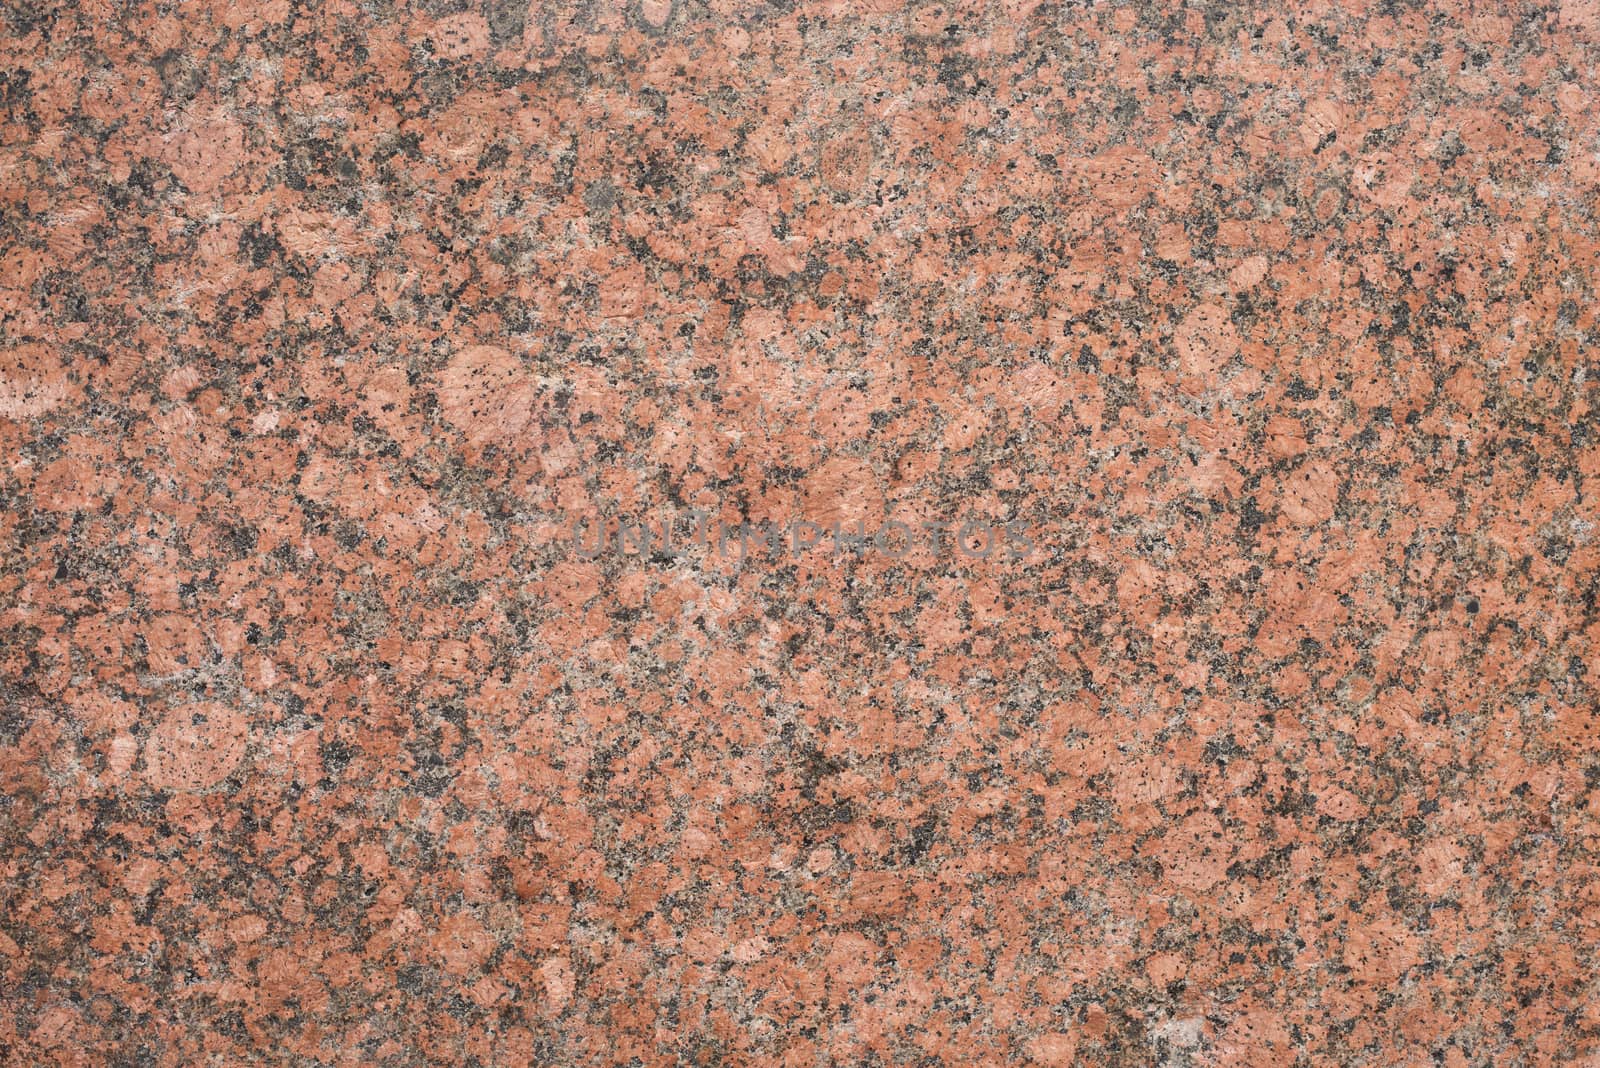 Brown granite stone wall. Nature texture background